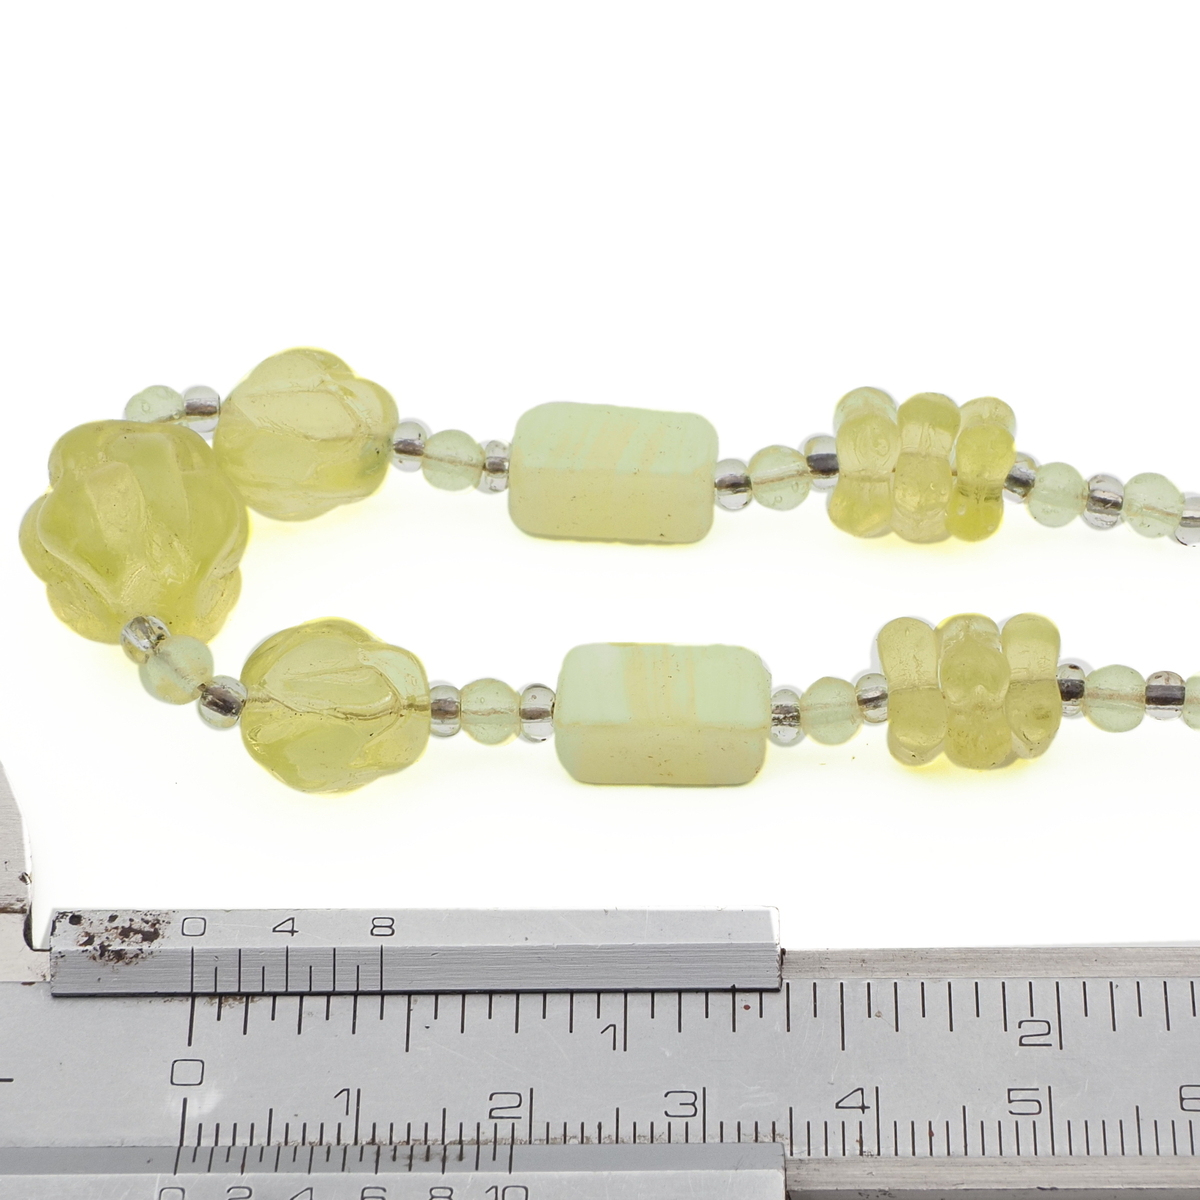 Vintage Czech necklace uranium glass beads